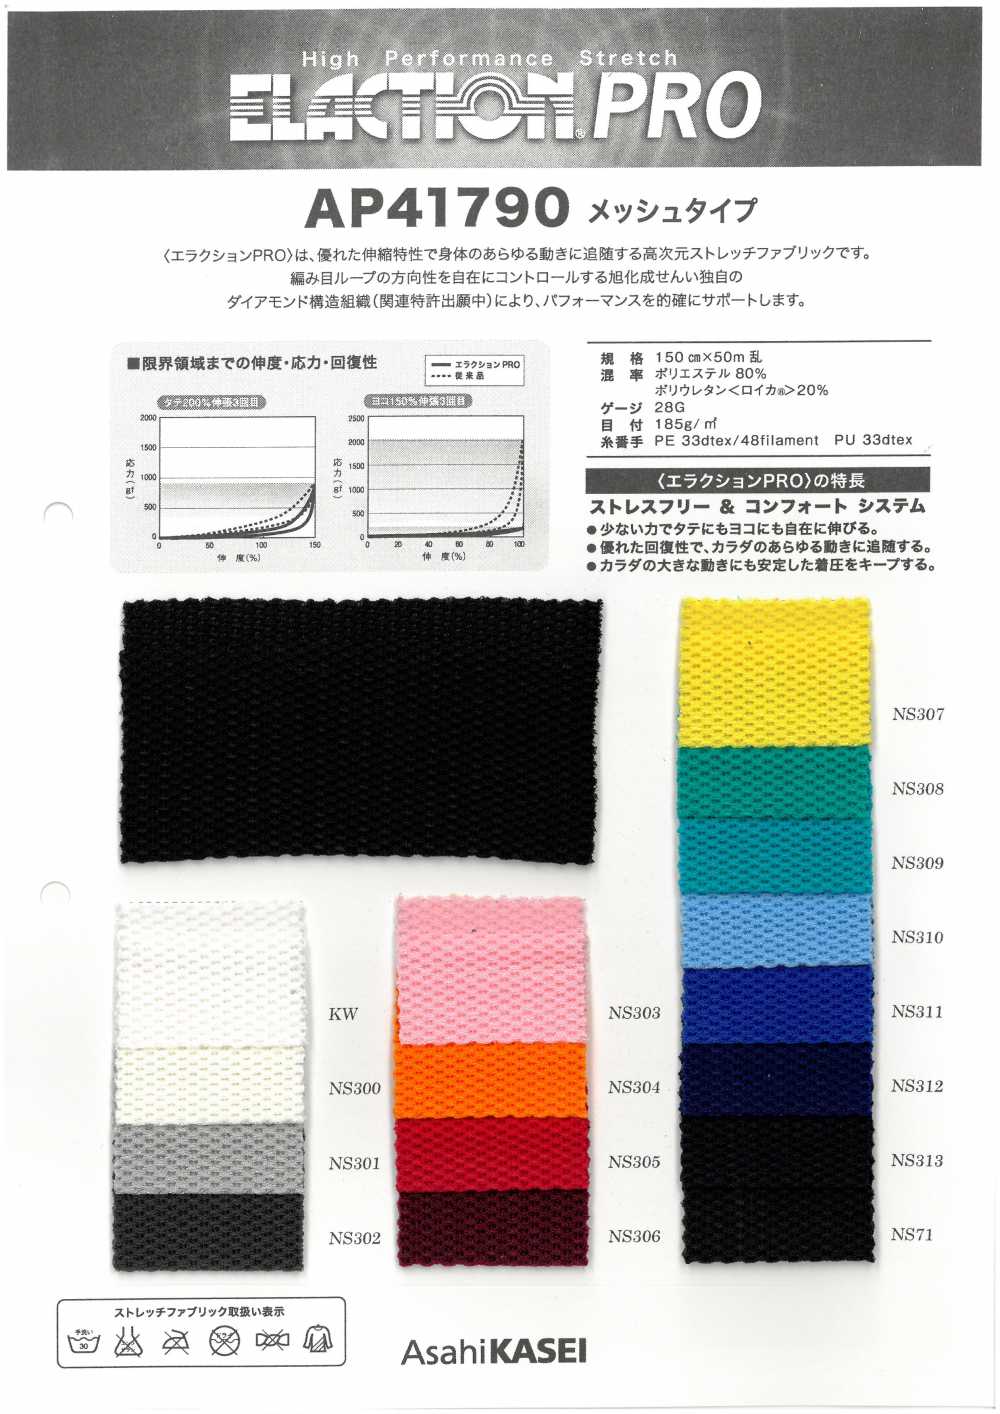 AP41790 Stretch Textile Mesh Type[Textile / Fabric] Japan Stretch